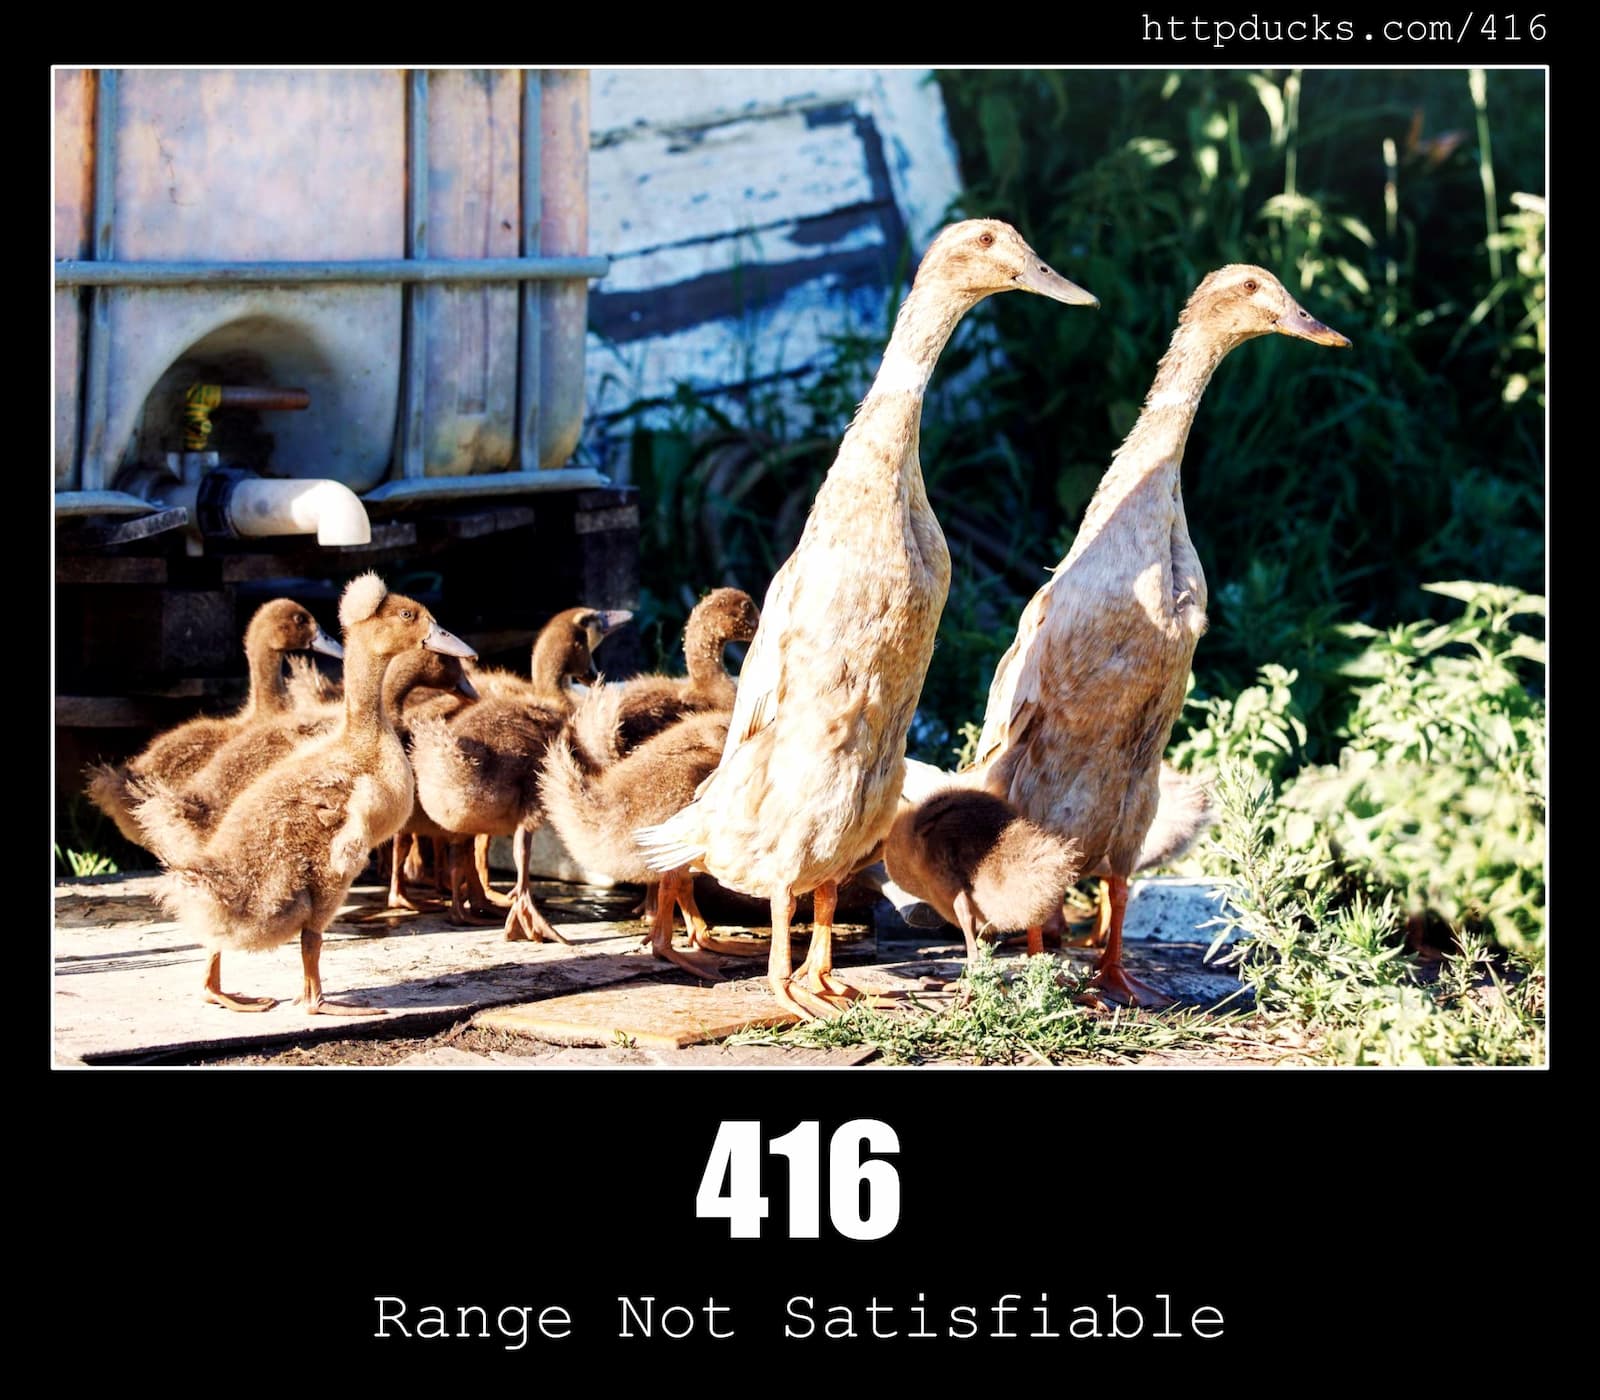 HTTP Status Code 416 Range Not Satisfiable & Ducks